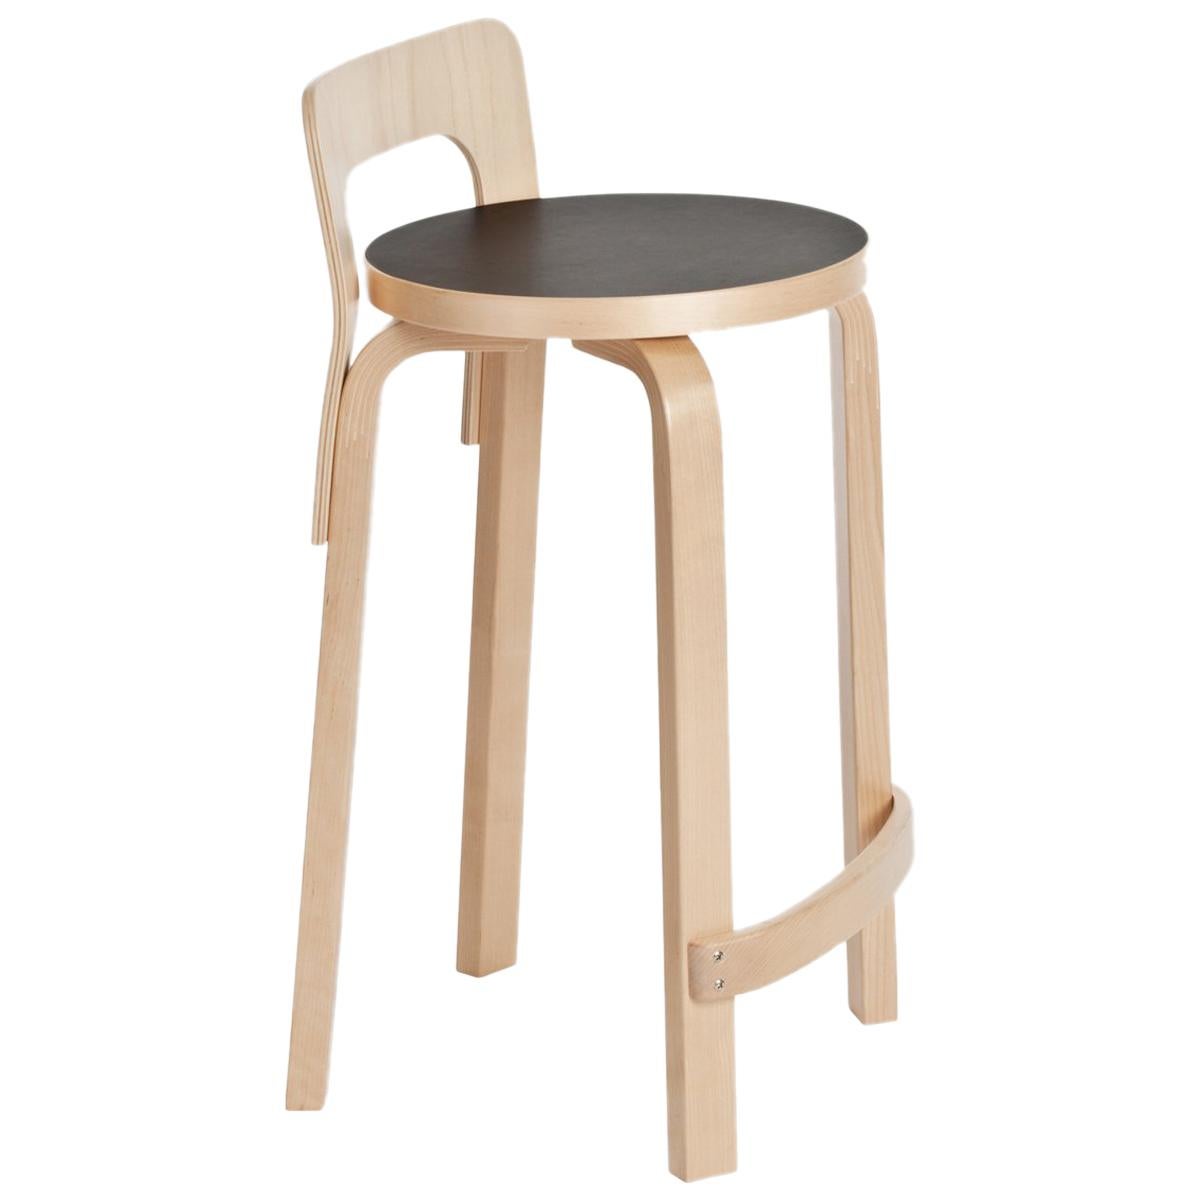 Authentic High Chair K65 in Birch with Linoleum Seat by Alvar Aalto & Artek